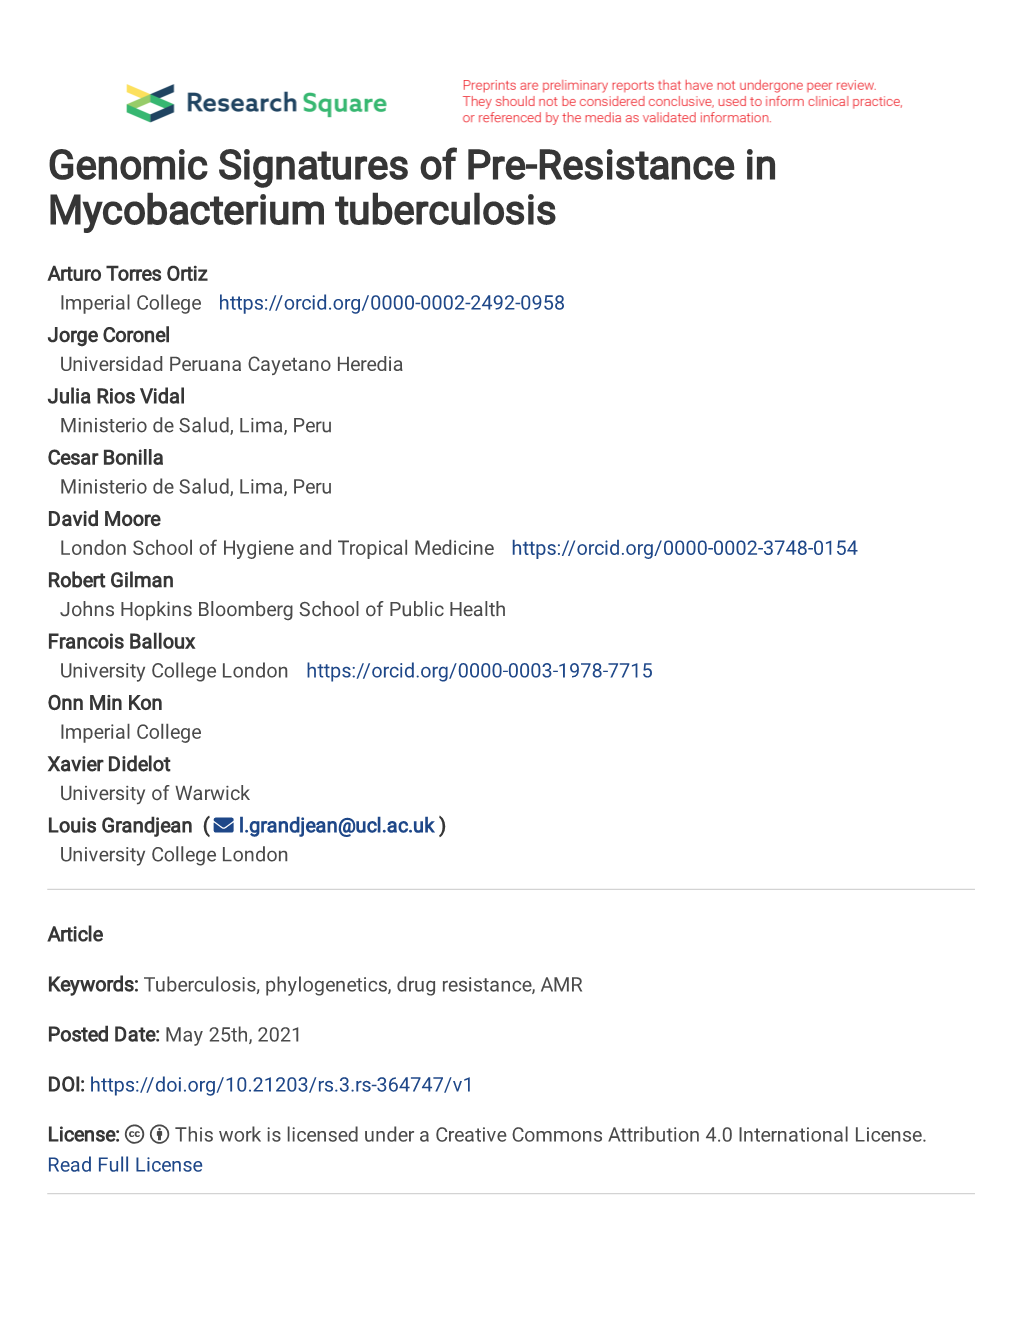 Genomic Signatures of Pre-Resistance in Mycobacterium Tuberculosis